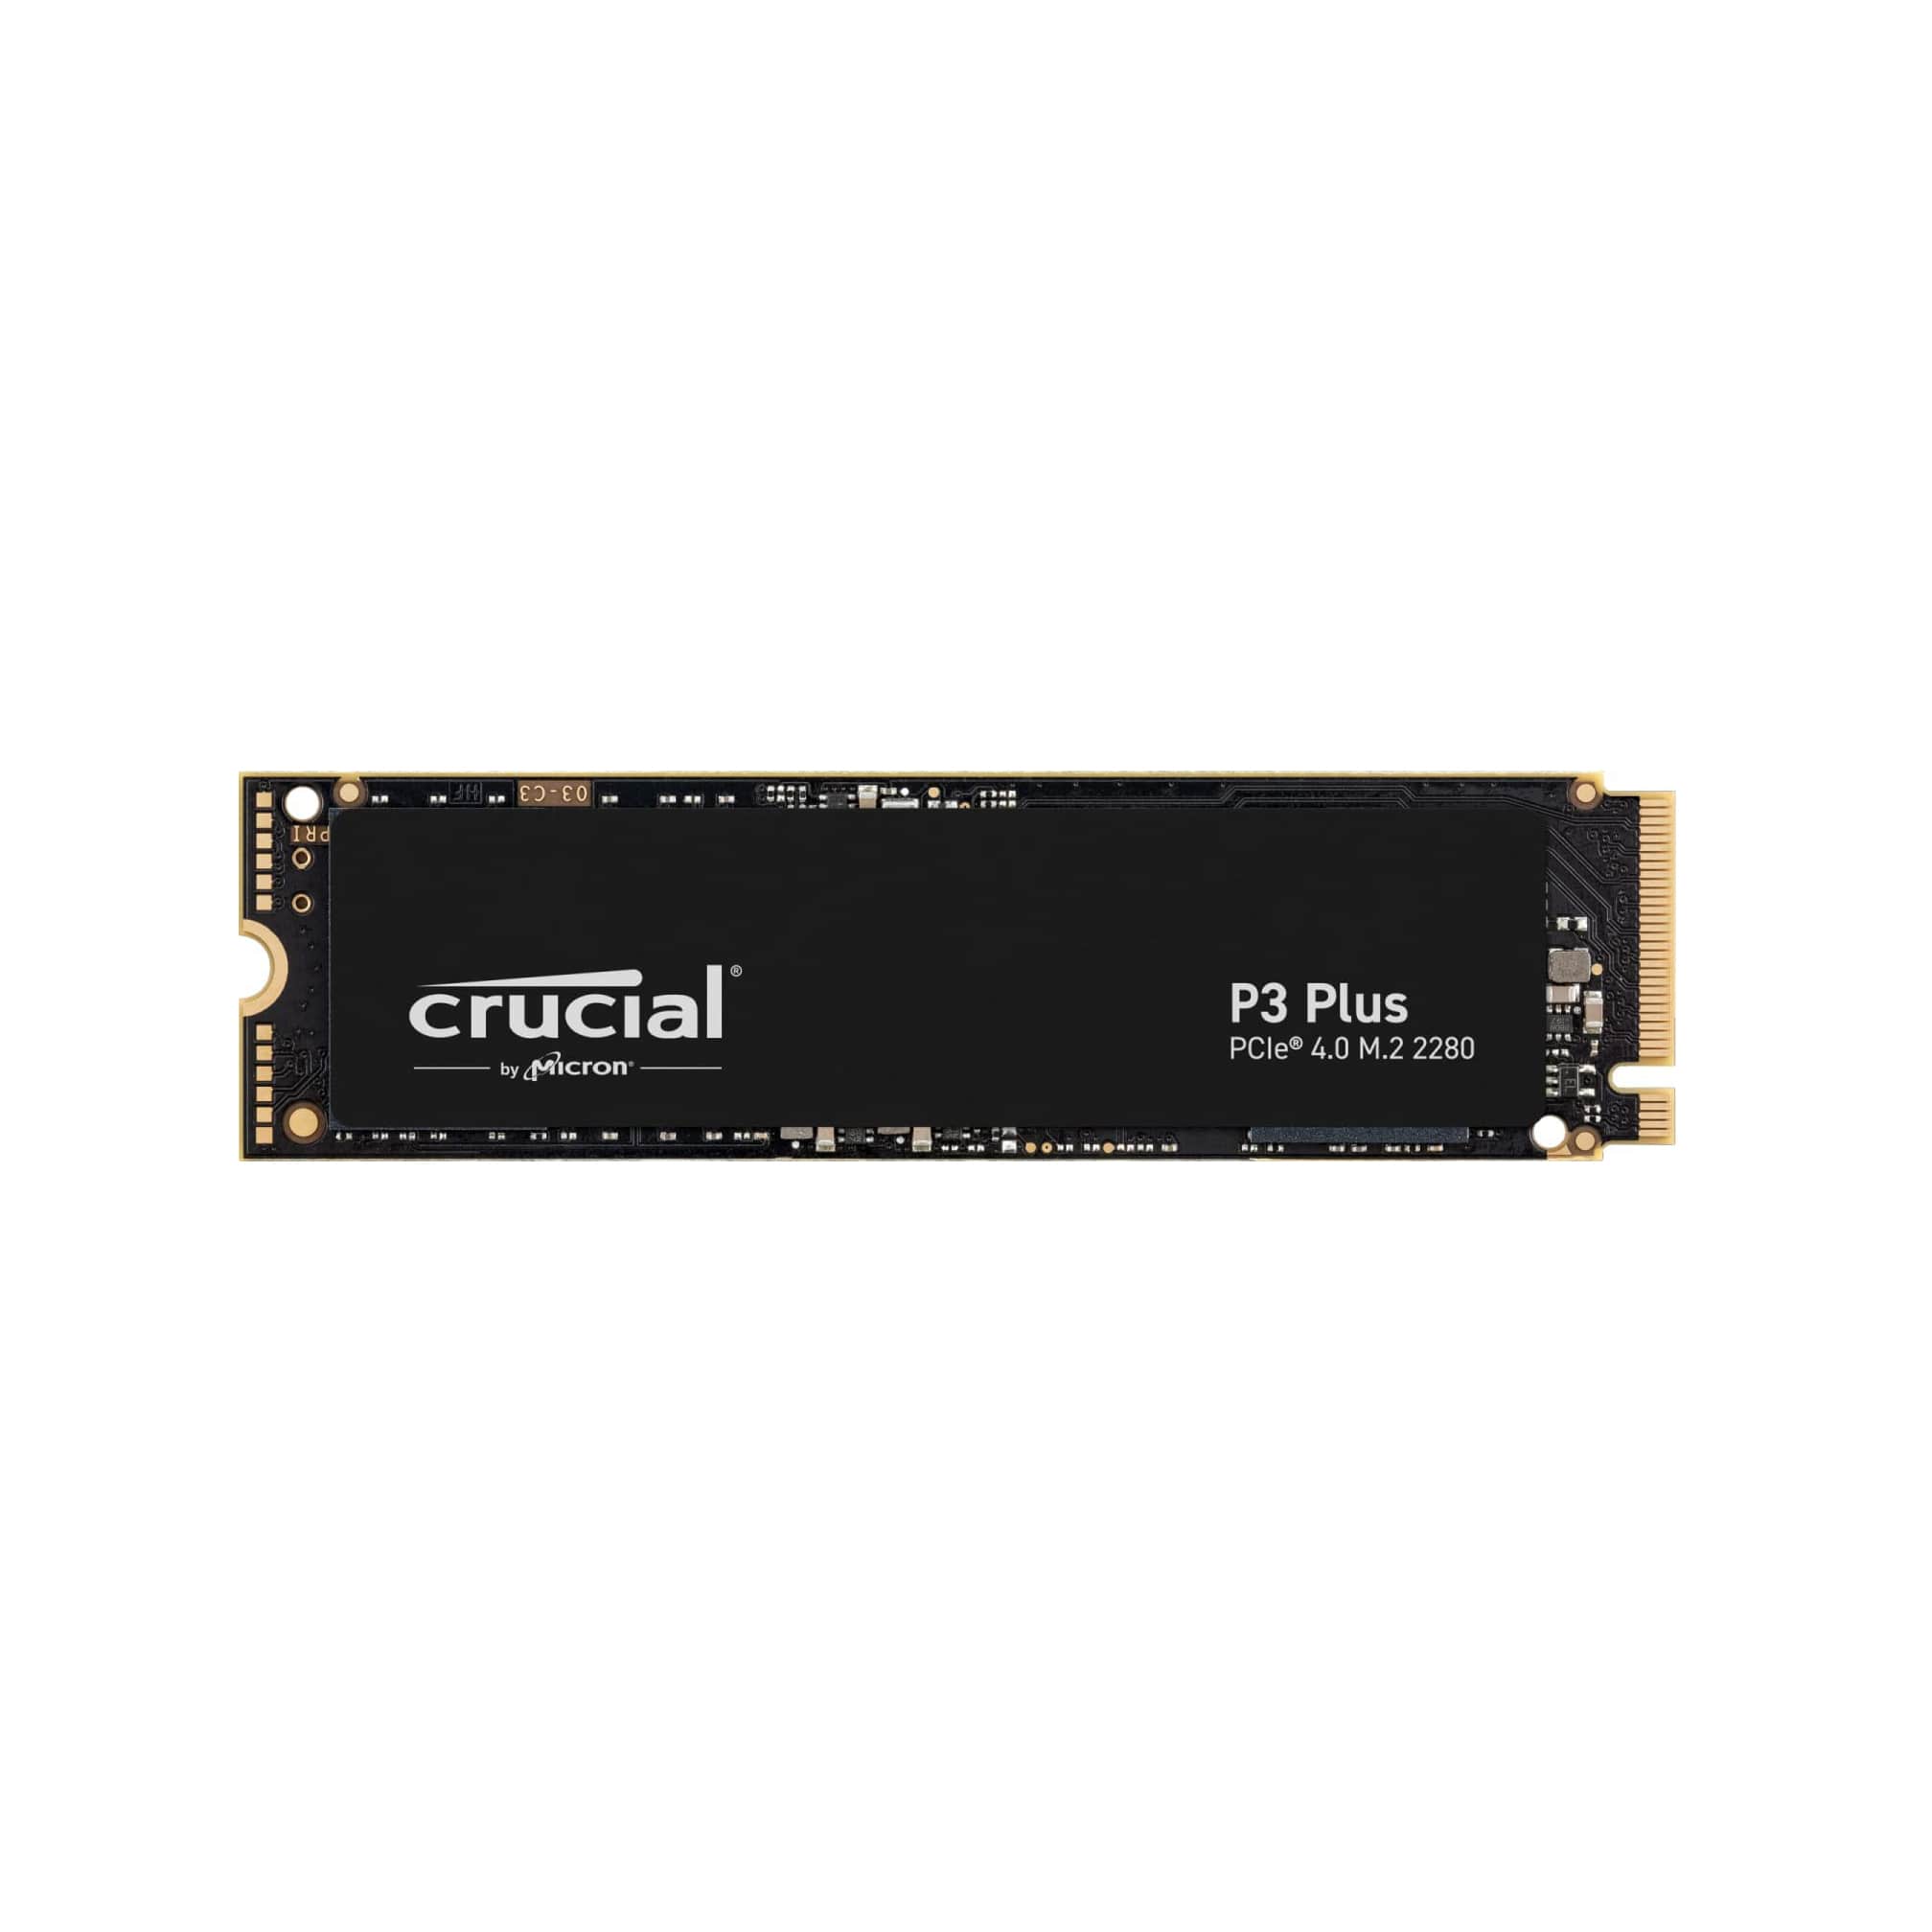 Crucial P3 Plus 1TB PCIe Gen4 3D NAND NVMe M.2 SSD Computer Hardware  |  Storage  |  SSD  |